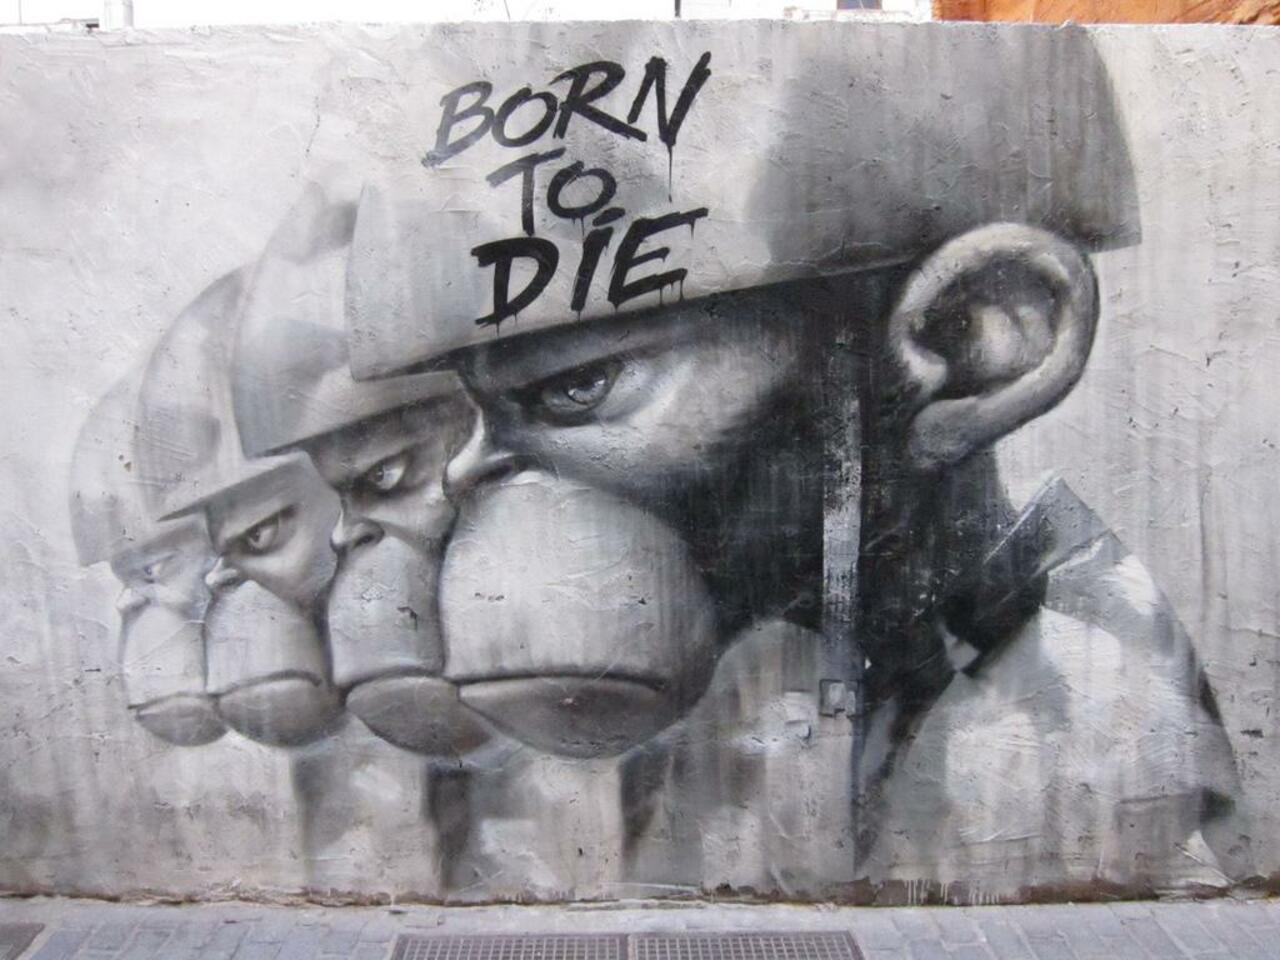 RT @Brindille_: #Streetart #urbanart #graffiti #mural "Born to Die" by #artist Mankey in Valencia, Spain http://t.co/itjyO78Dh7